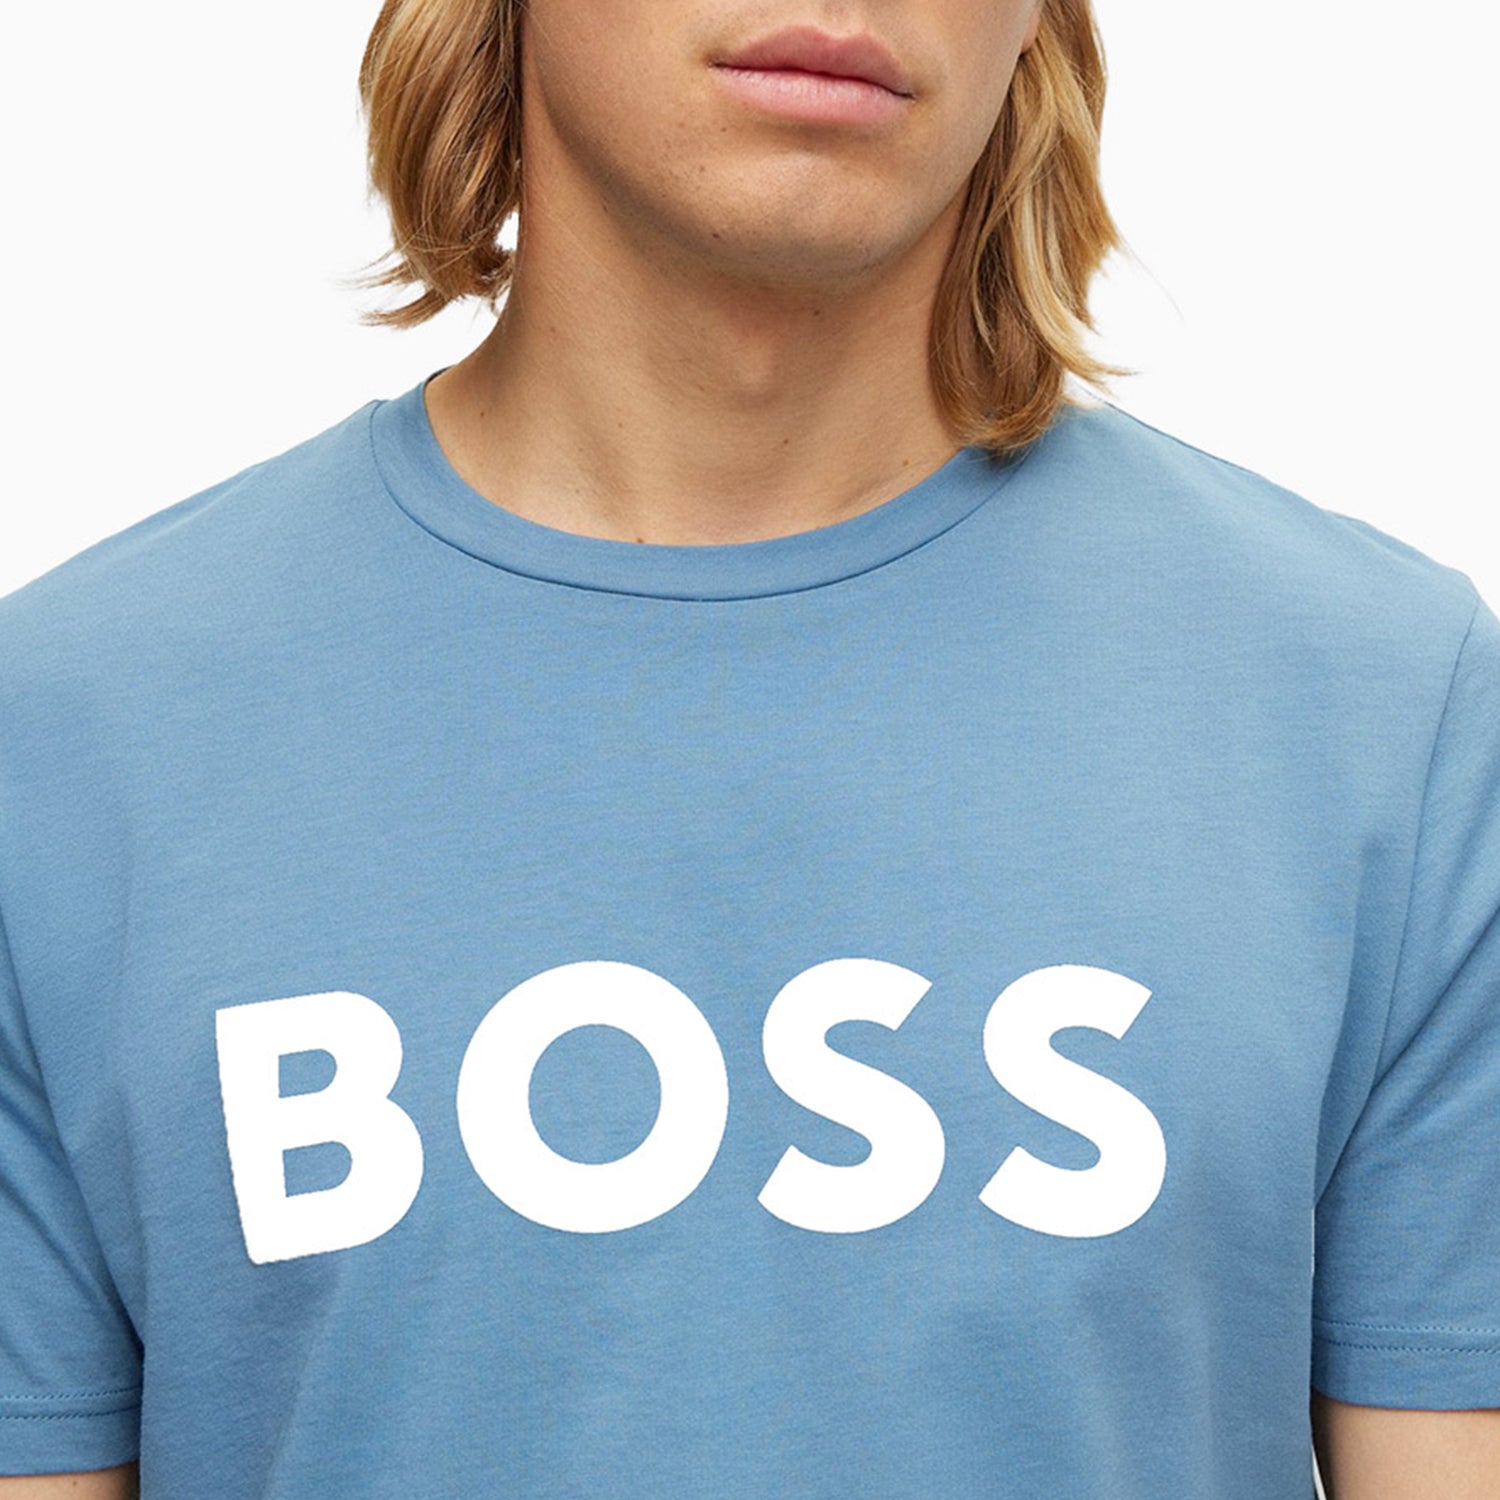 hugo-boss-mens-cotton-jersey-t-shirt-with-rubber-print-logo-50481923-460